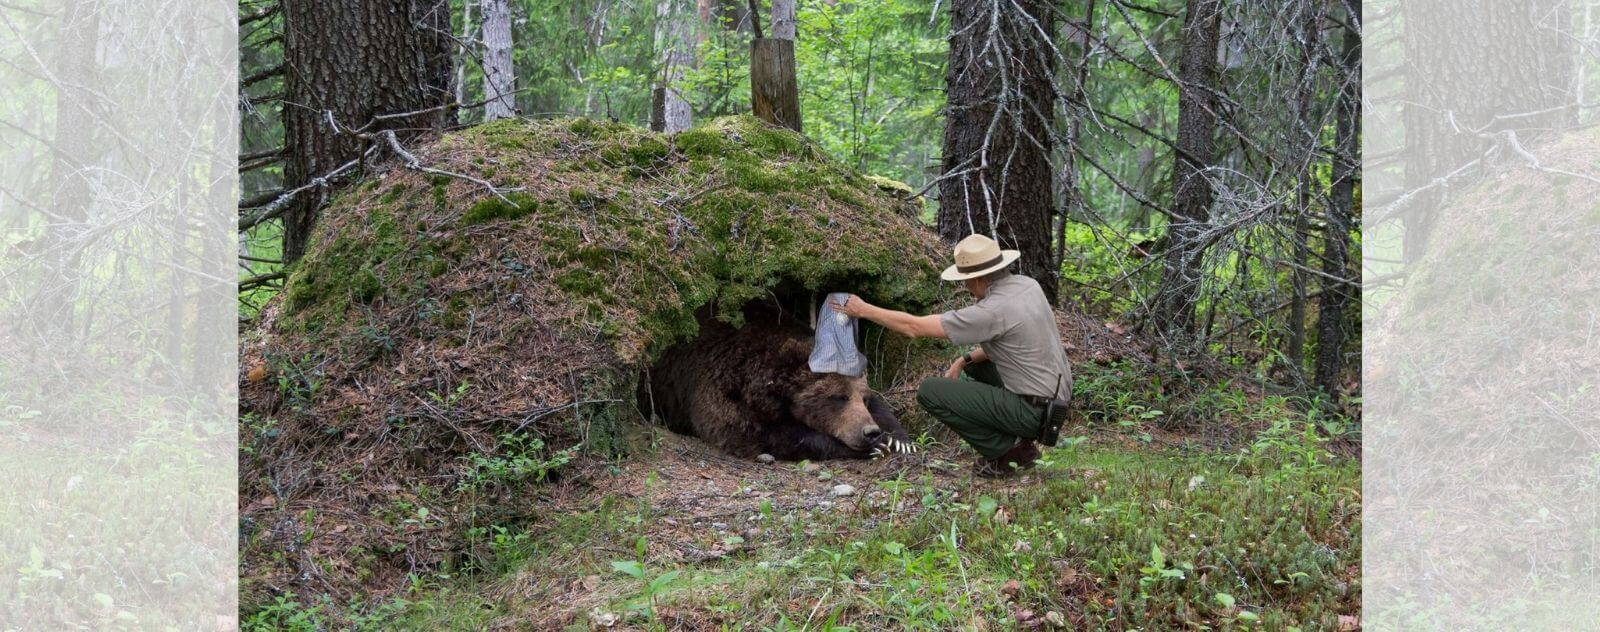 Ours qui Hiberne et Dort dans la Forêt